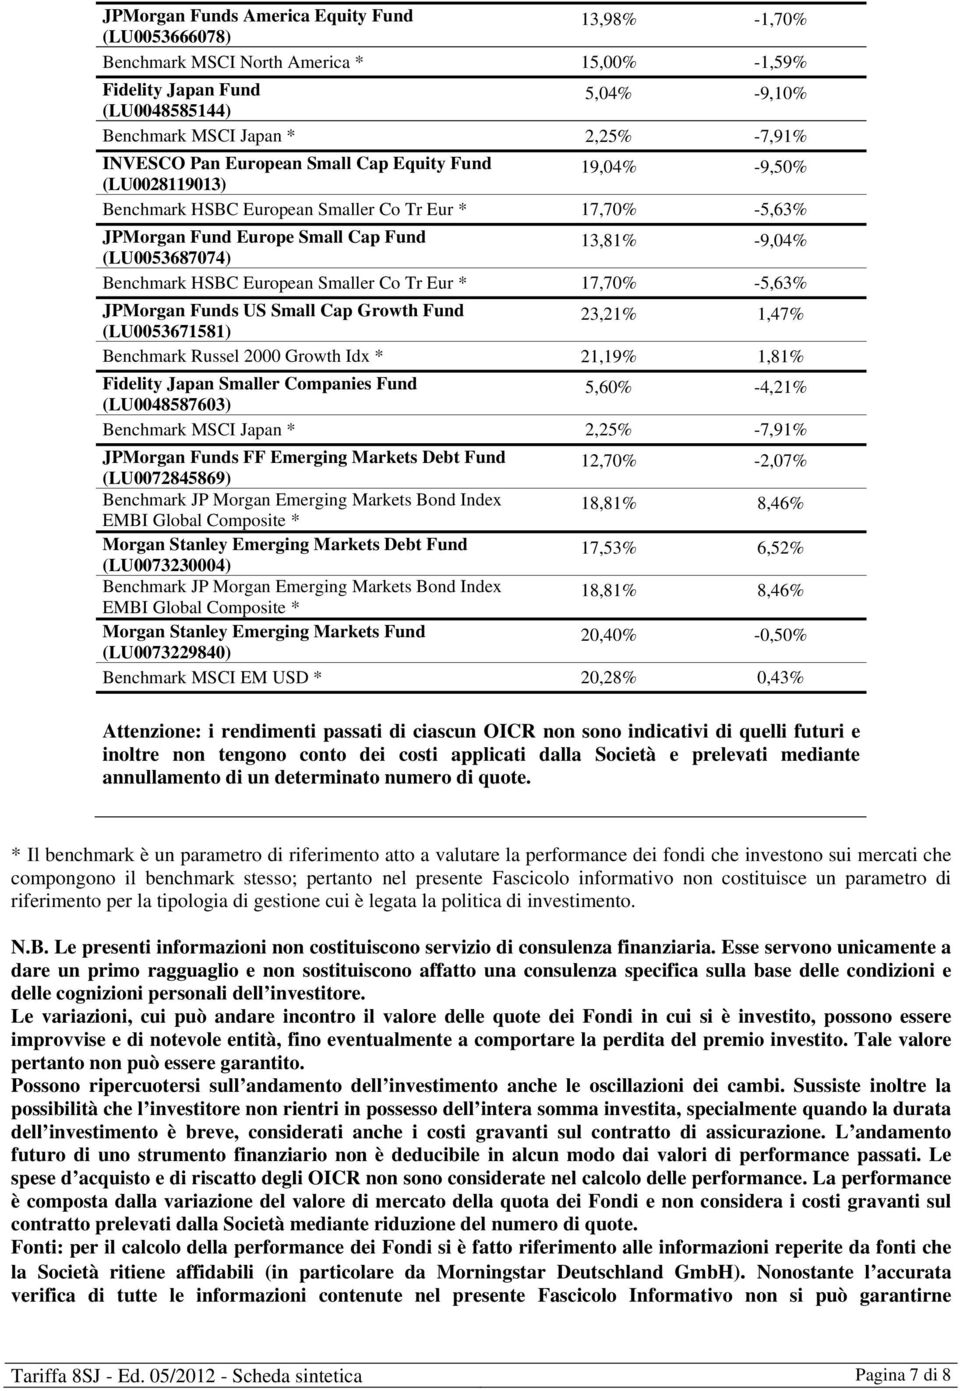 Benchmark HSBC European Smaller Co Tr Eur * 17,70% -5,63% JPMorgan Funds US Small Cap Growth Fund (LU0053671581) 23,21% 1,47% Benchmark Russel 2000 Growth Idx * 21,19% 1,81% Fidelity Japan Smaller